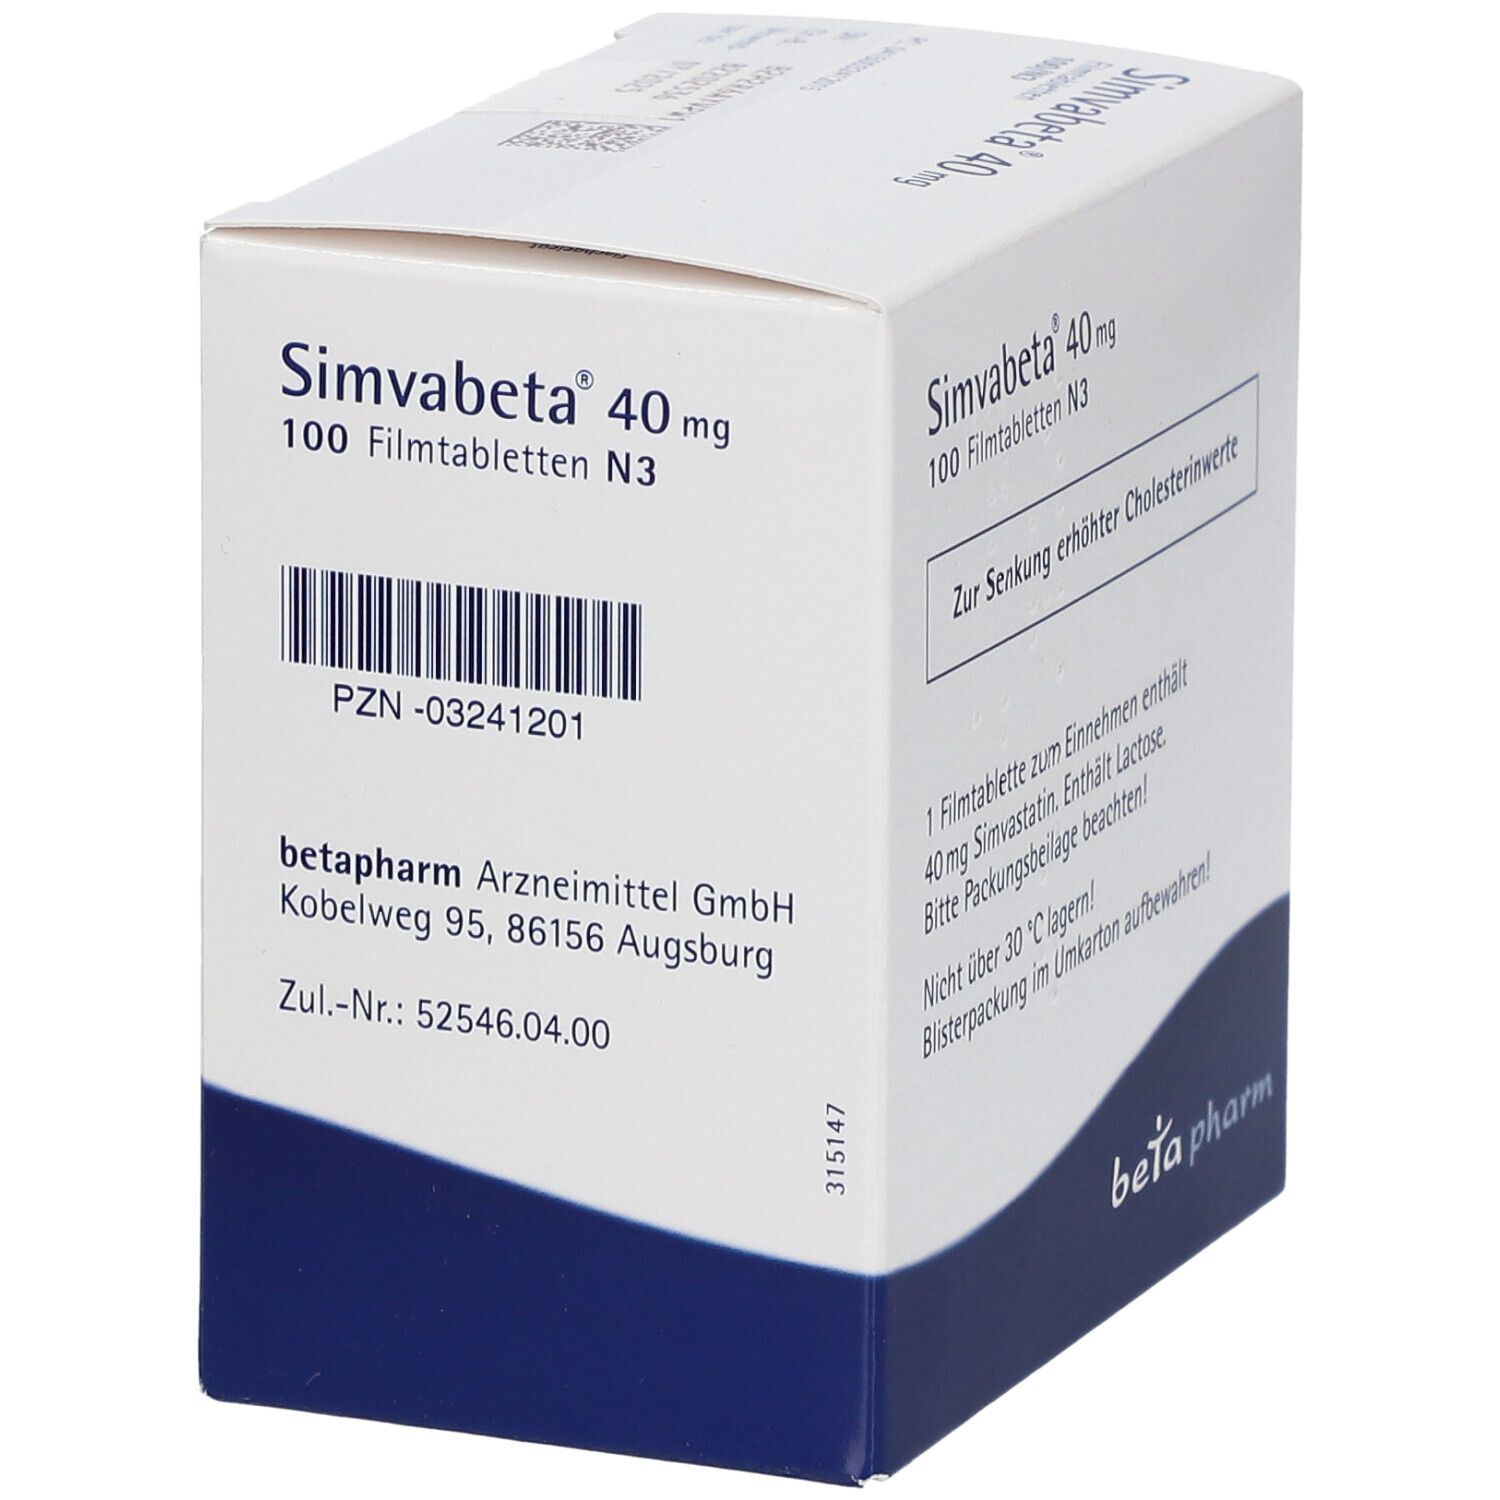 Simvabeta® 40 mg